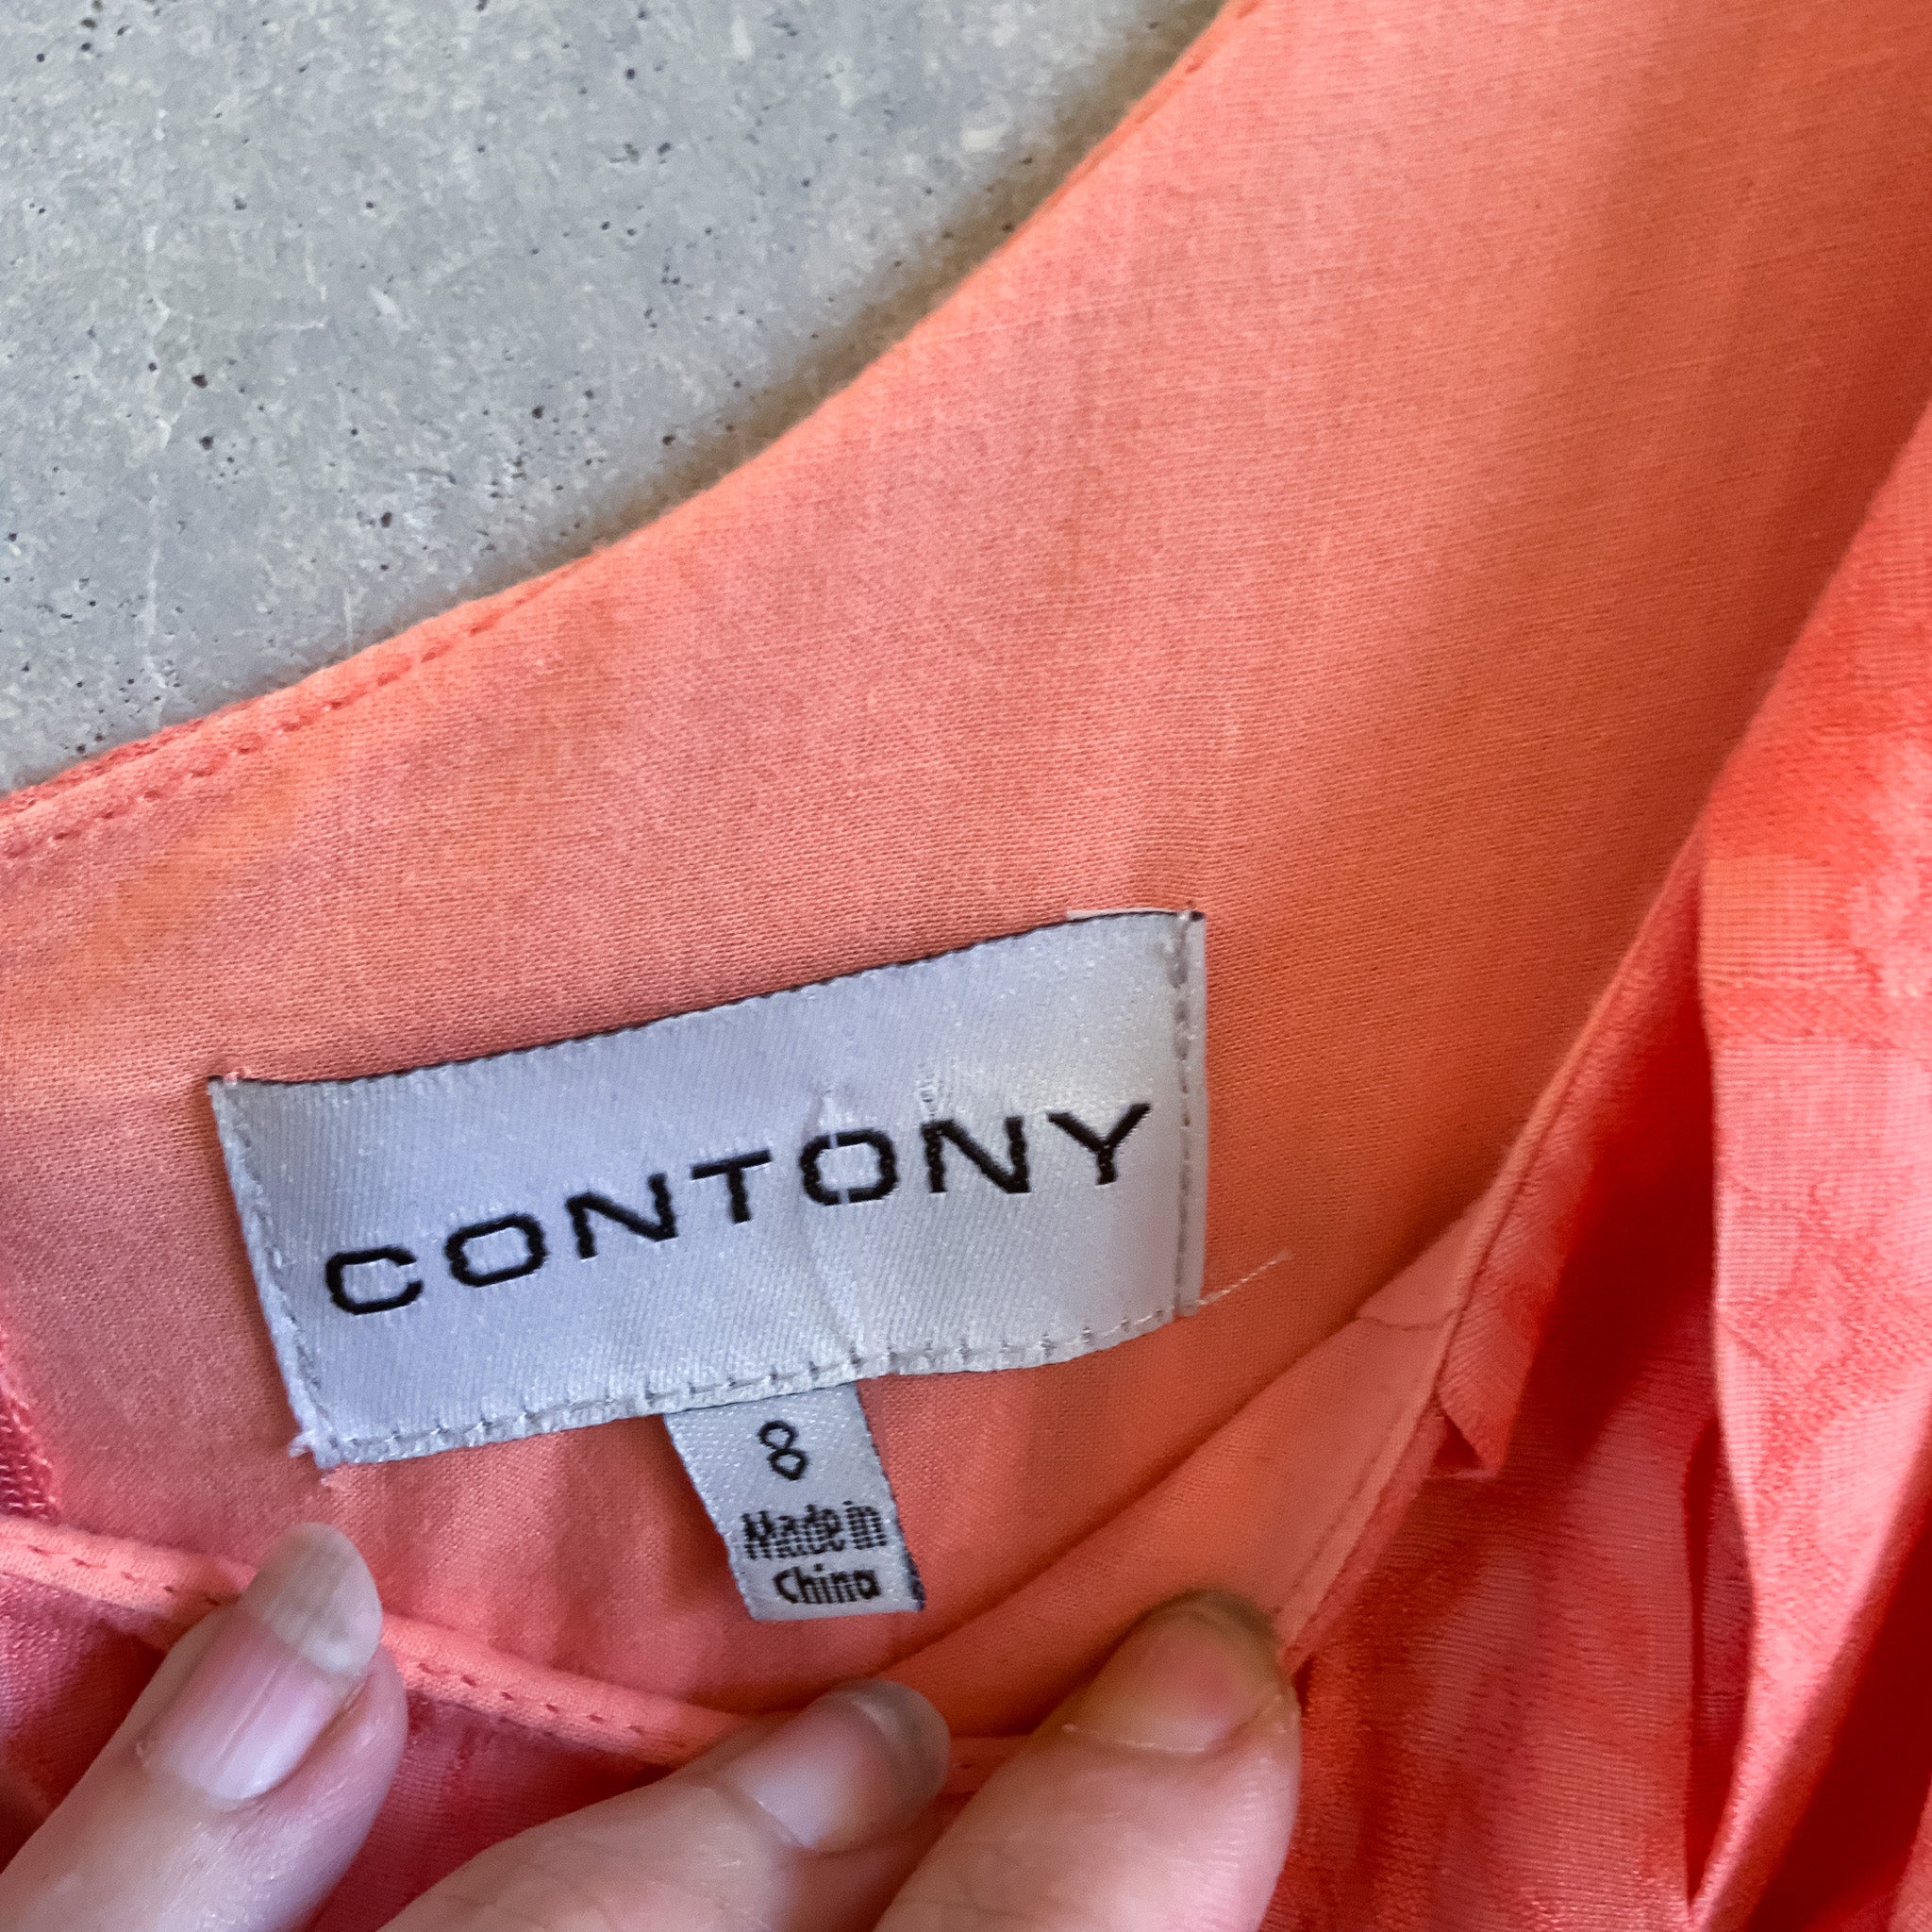 COTONY Sweet Apricot Colour Floral Print Fit & Flare Dress - Size 8